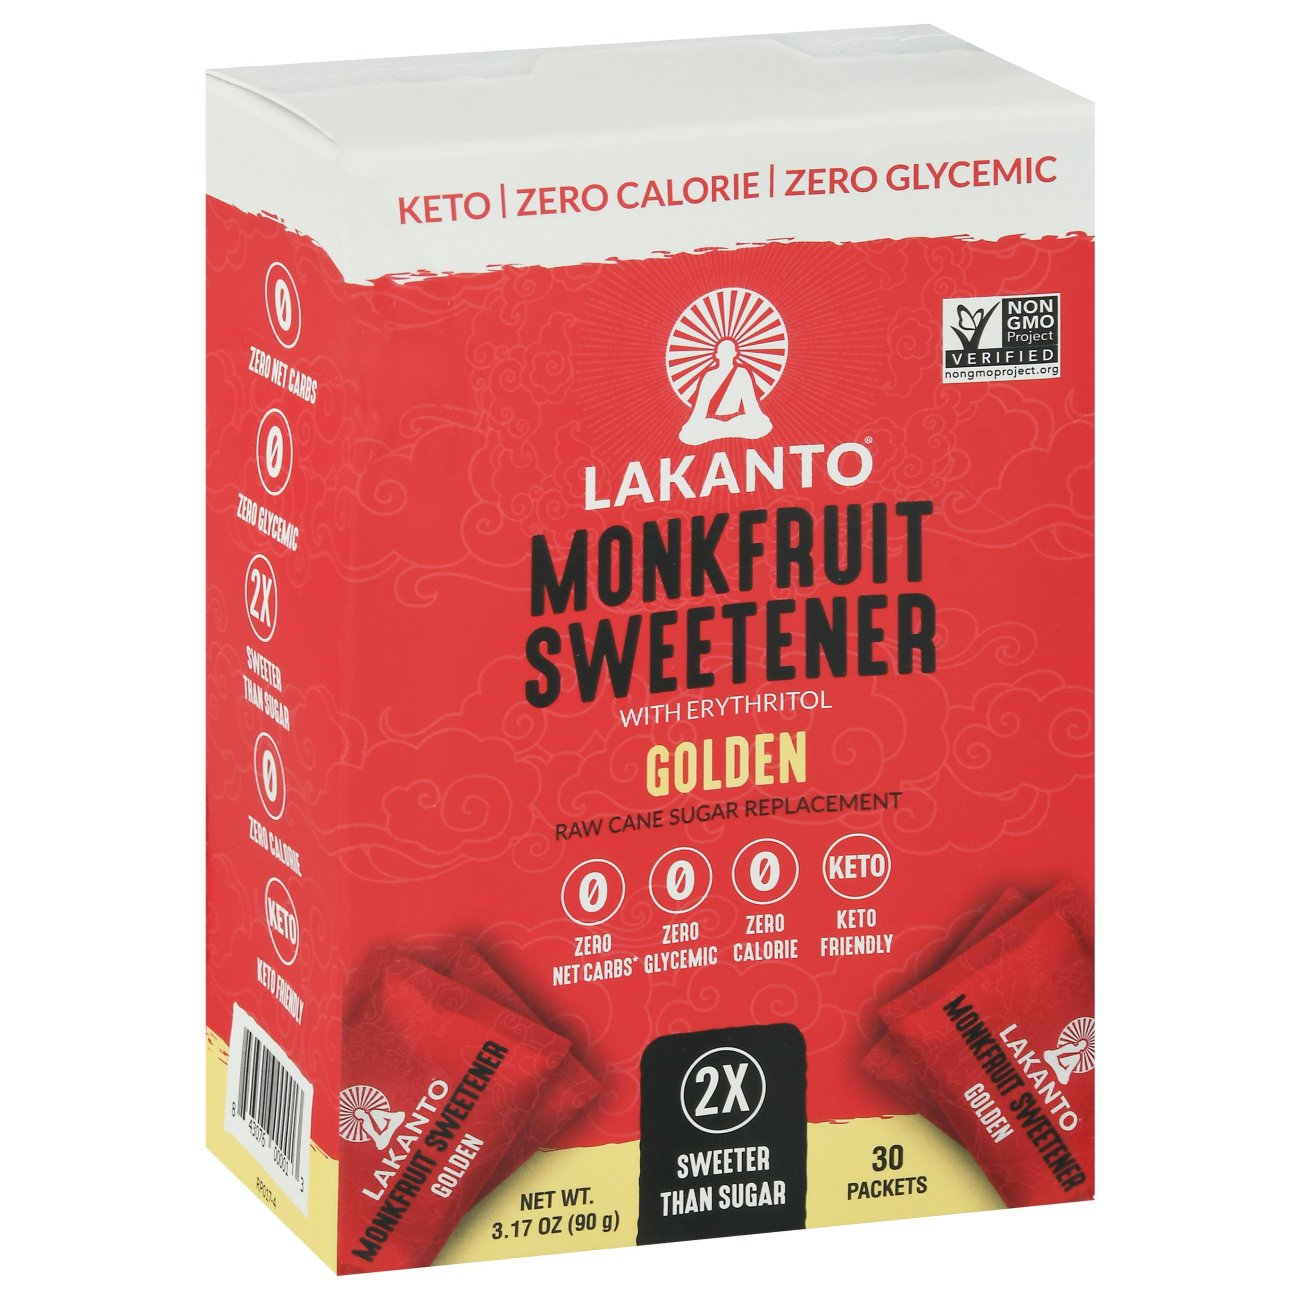 Lakanto Monkfruit Sweetener Stick